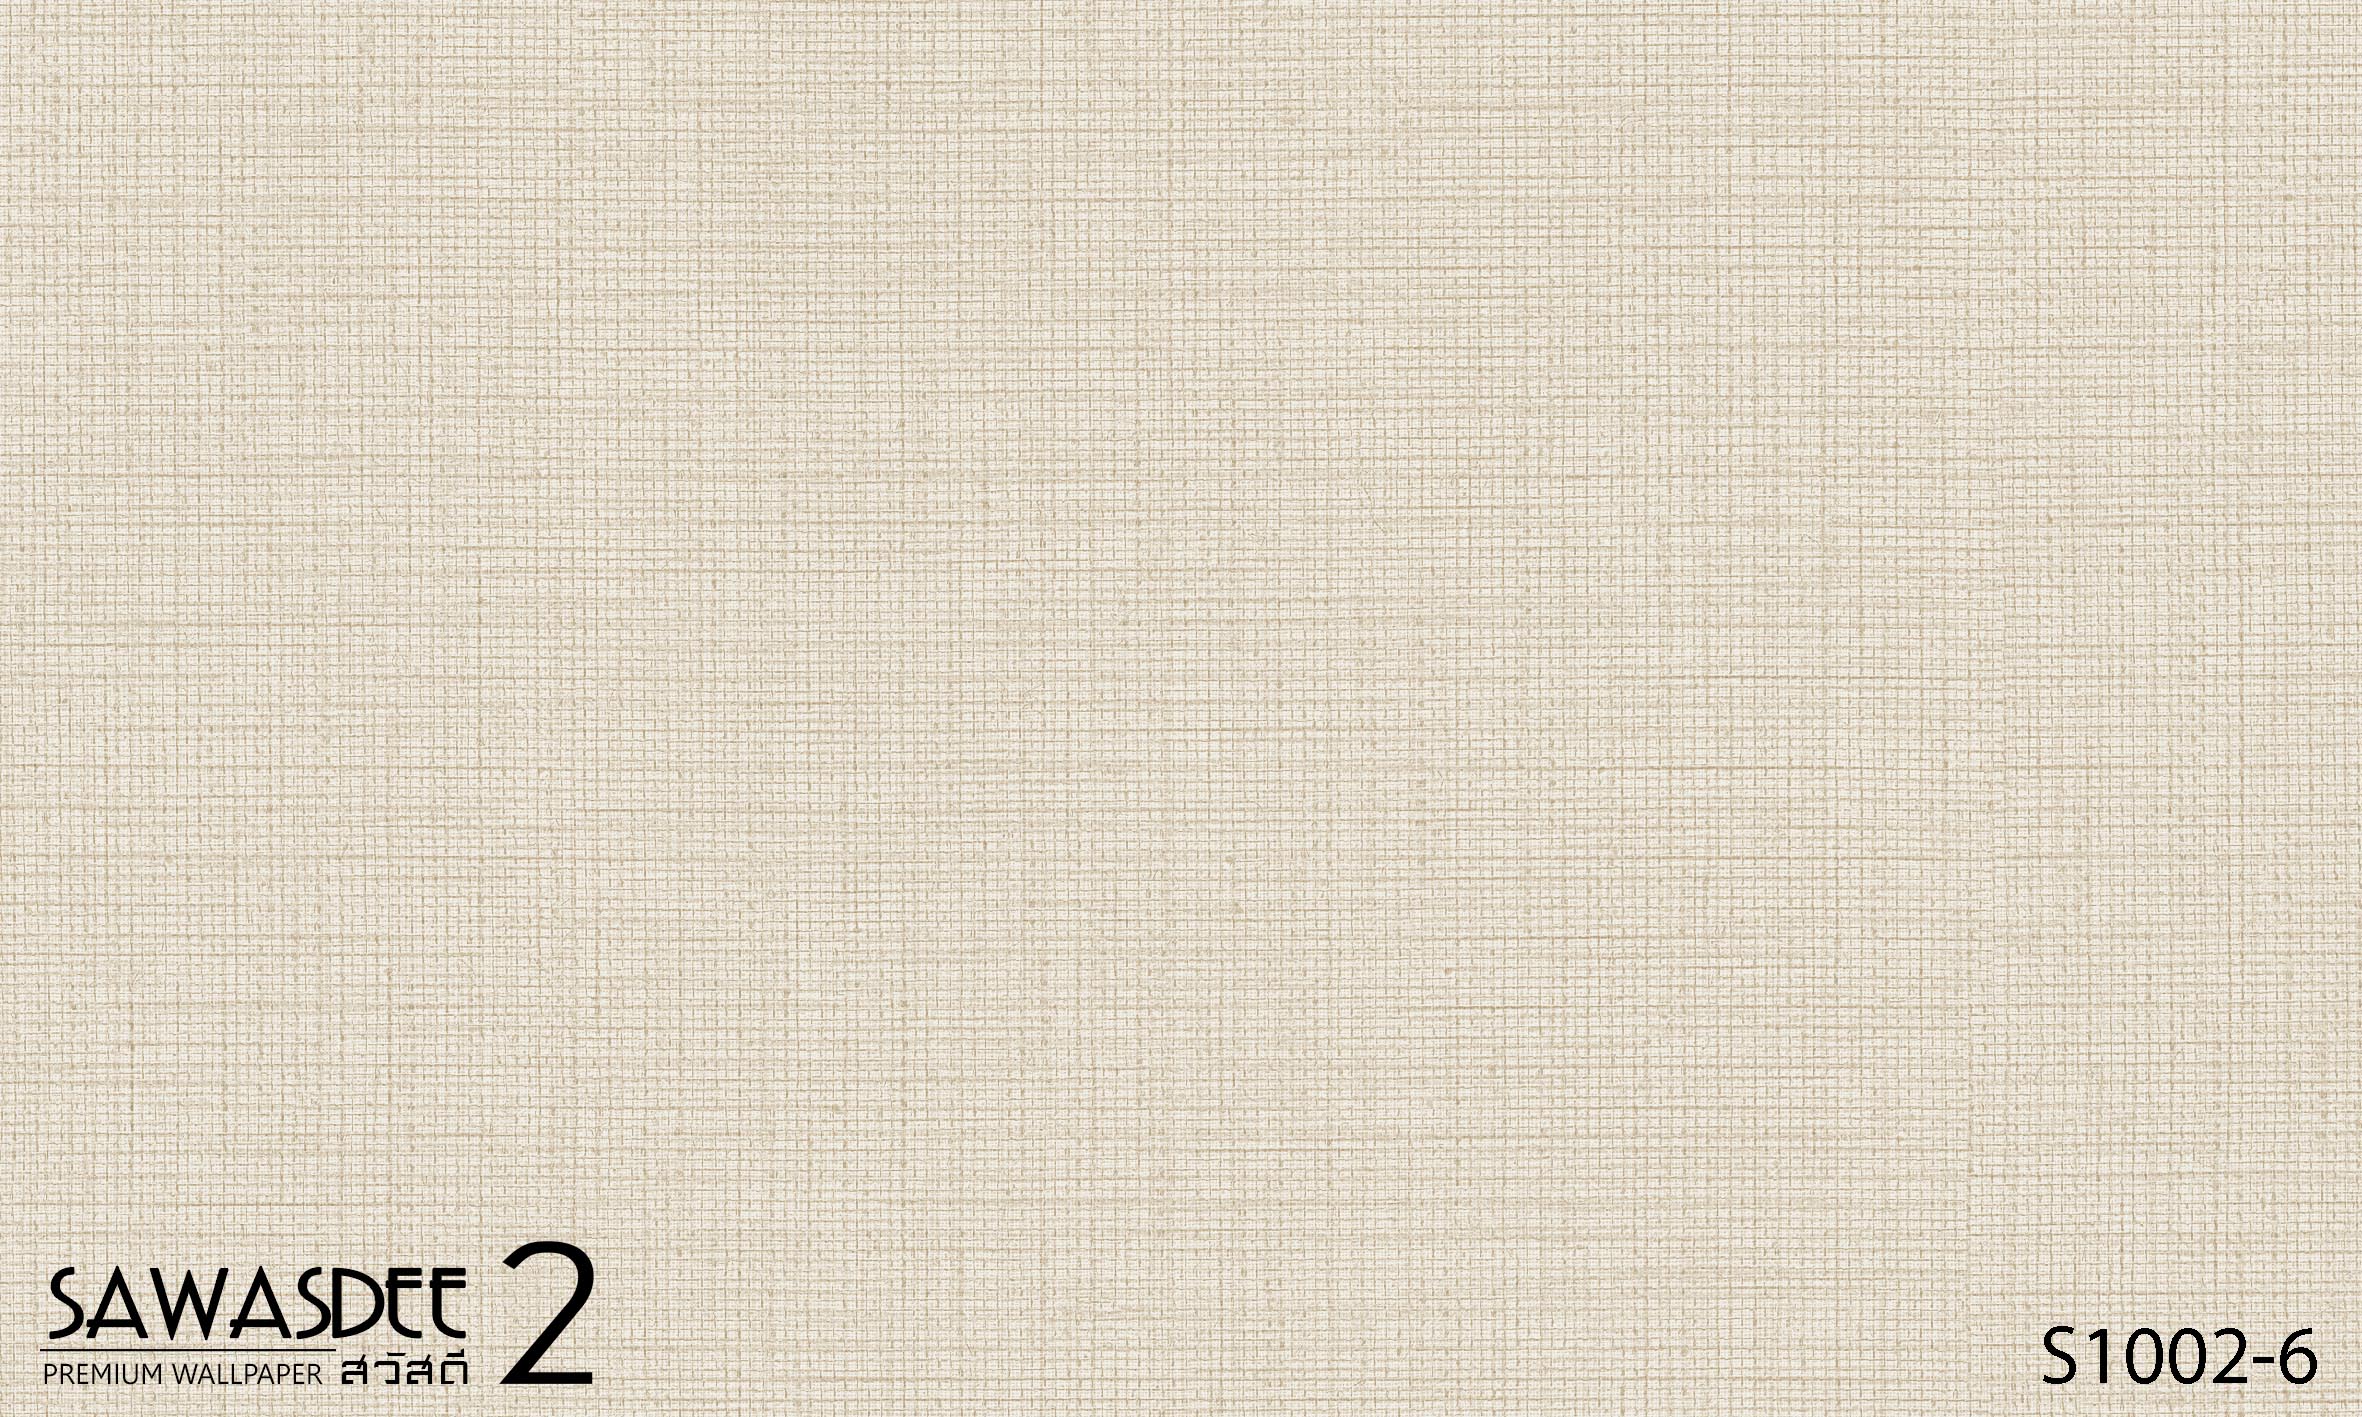 Wallpaper (SAWASDEE 2) S1002-6